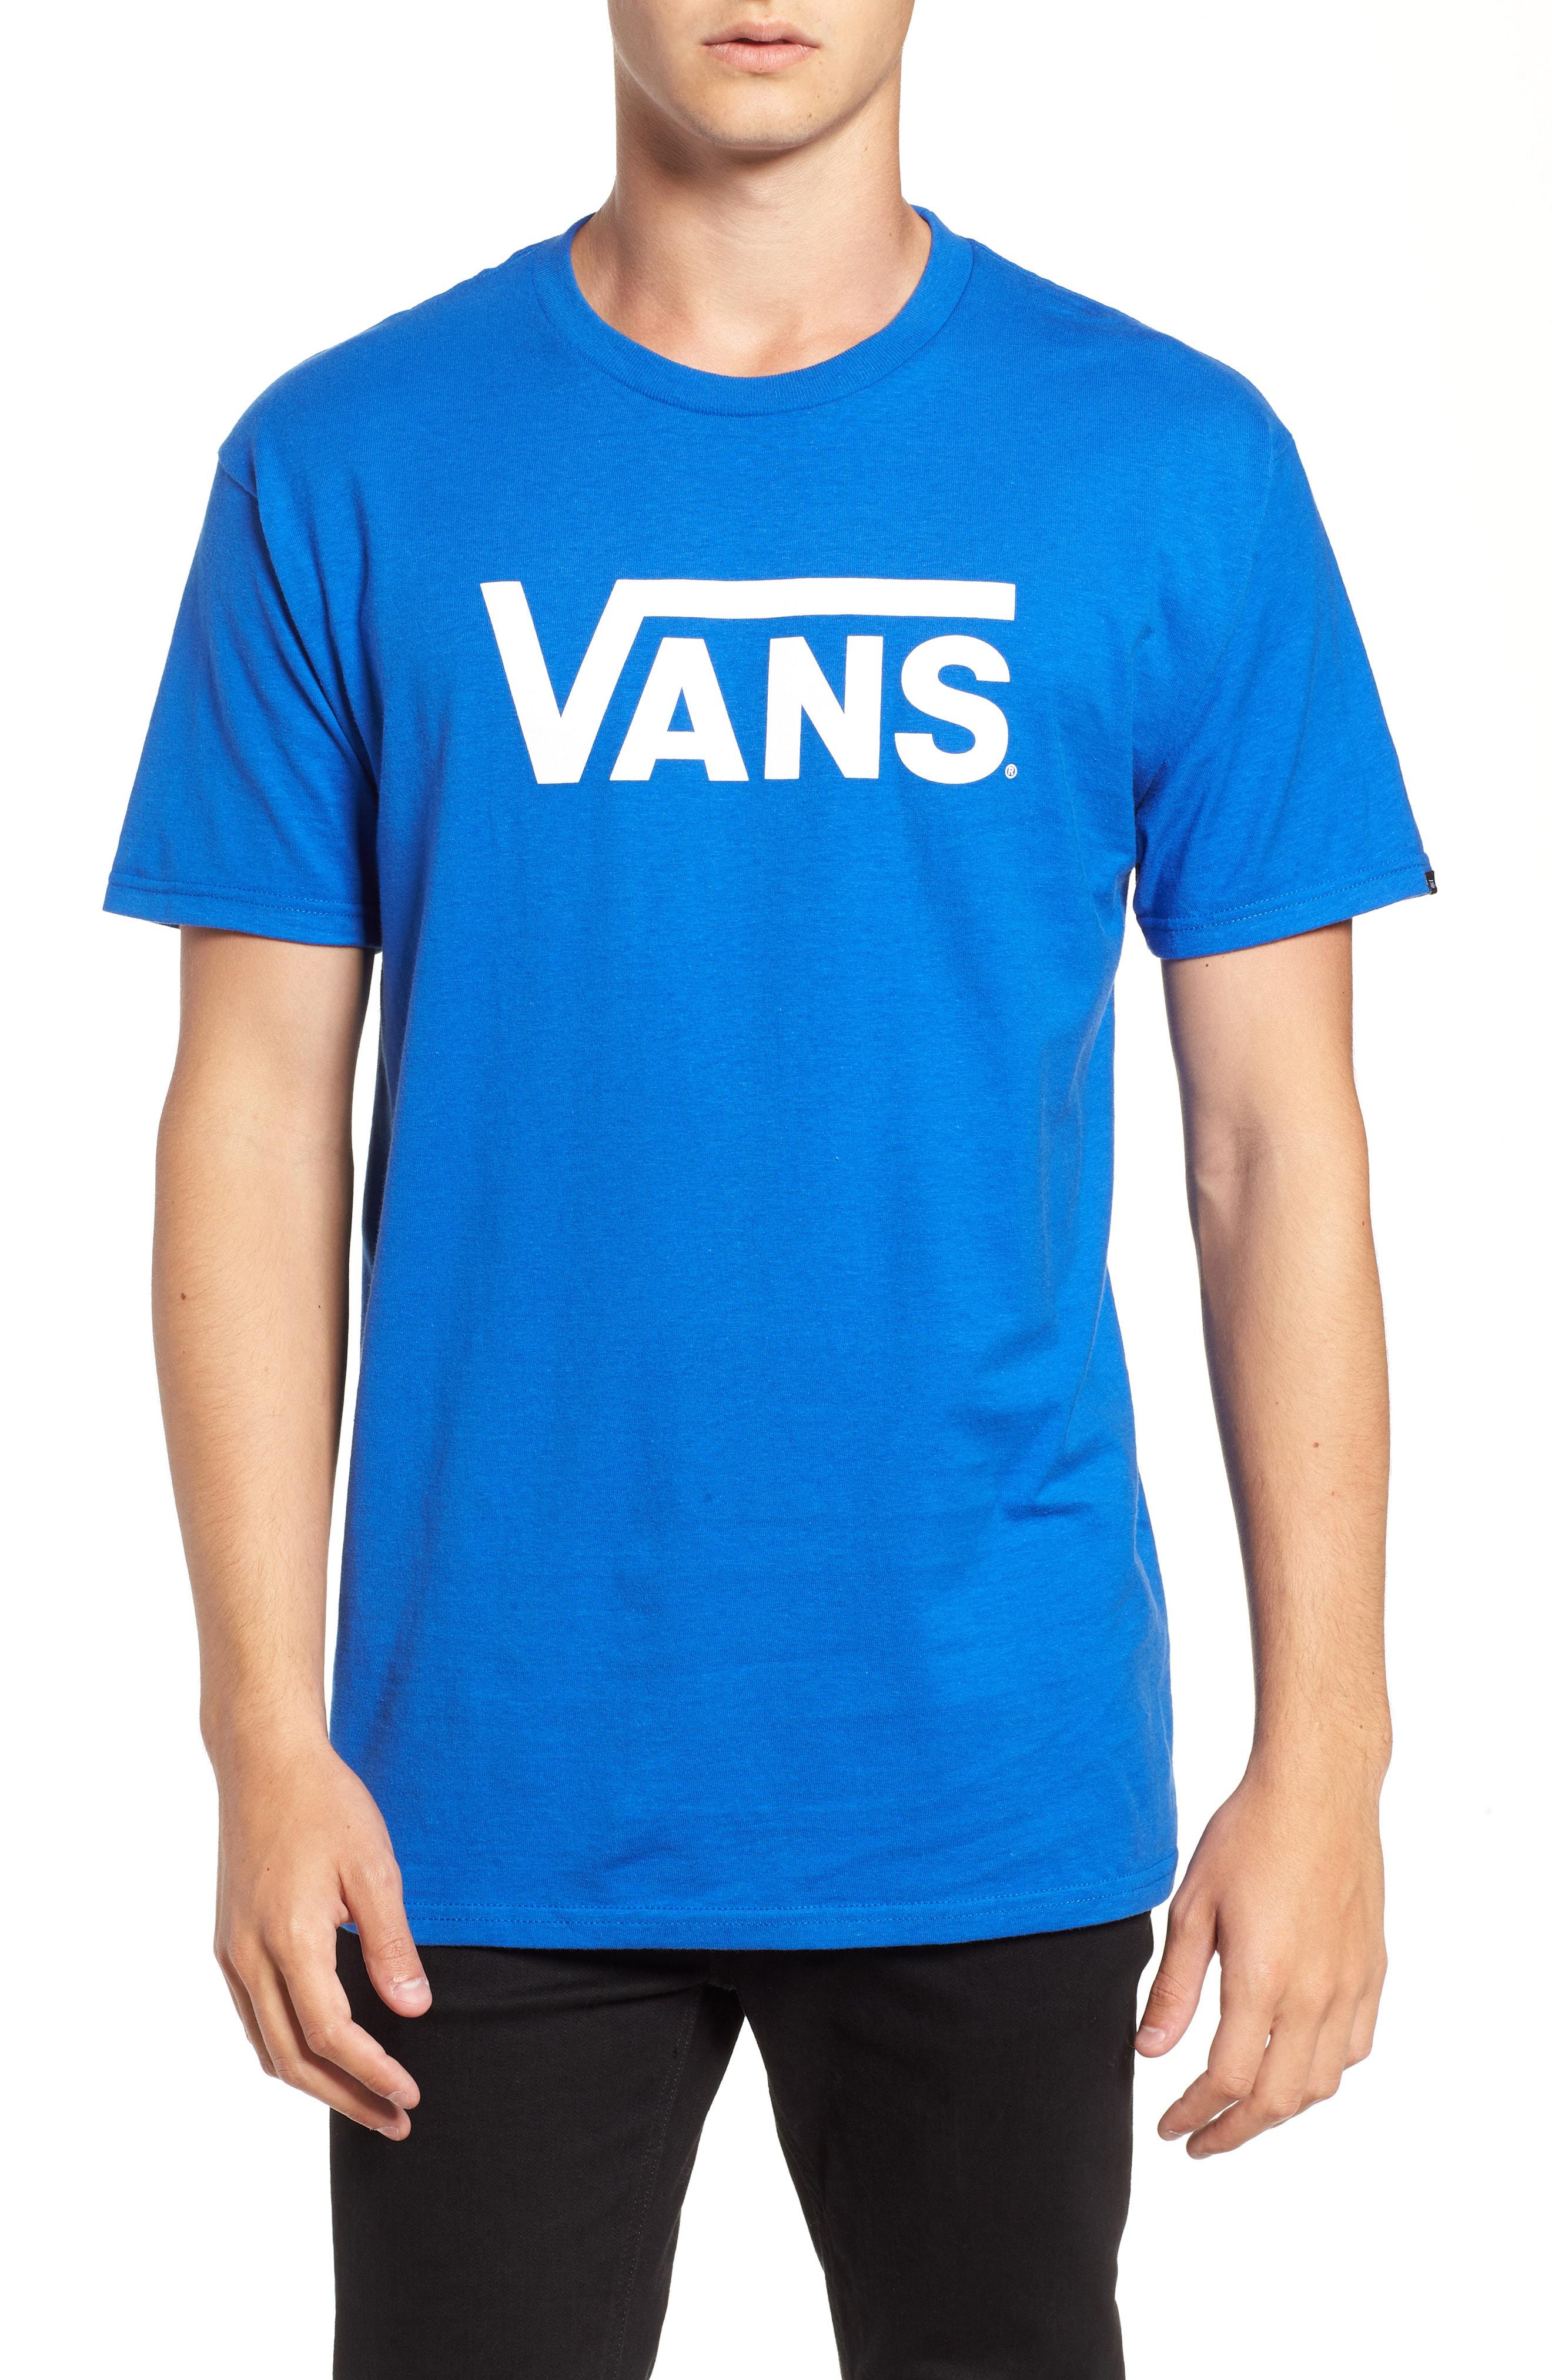 Vans Cotton Classic Logo T-shirt in Blue for Men - Lyst